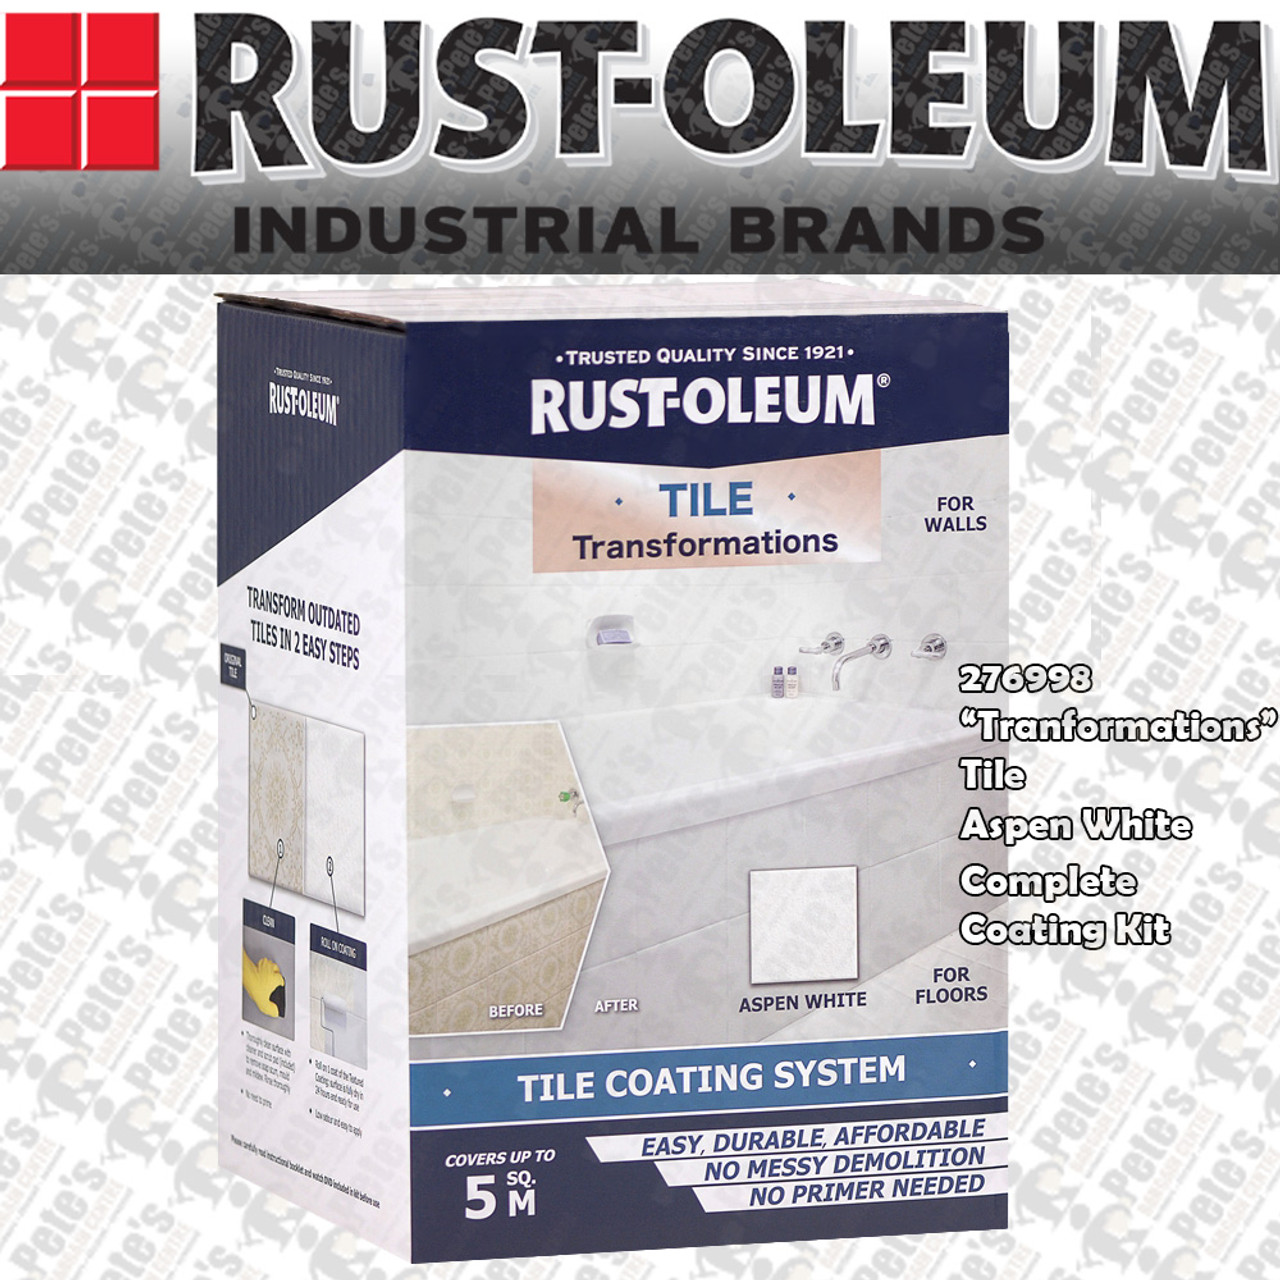 Rust-Oleum 247963 Metallic Stainless Steel Paint Kit 1 QT for sale online